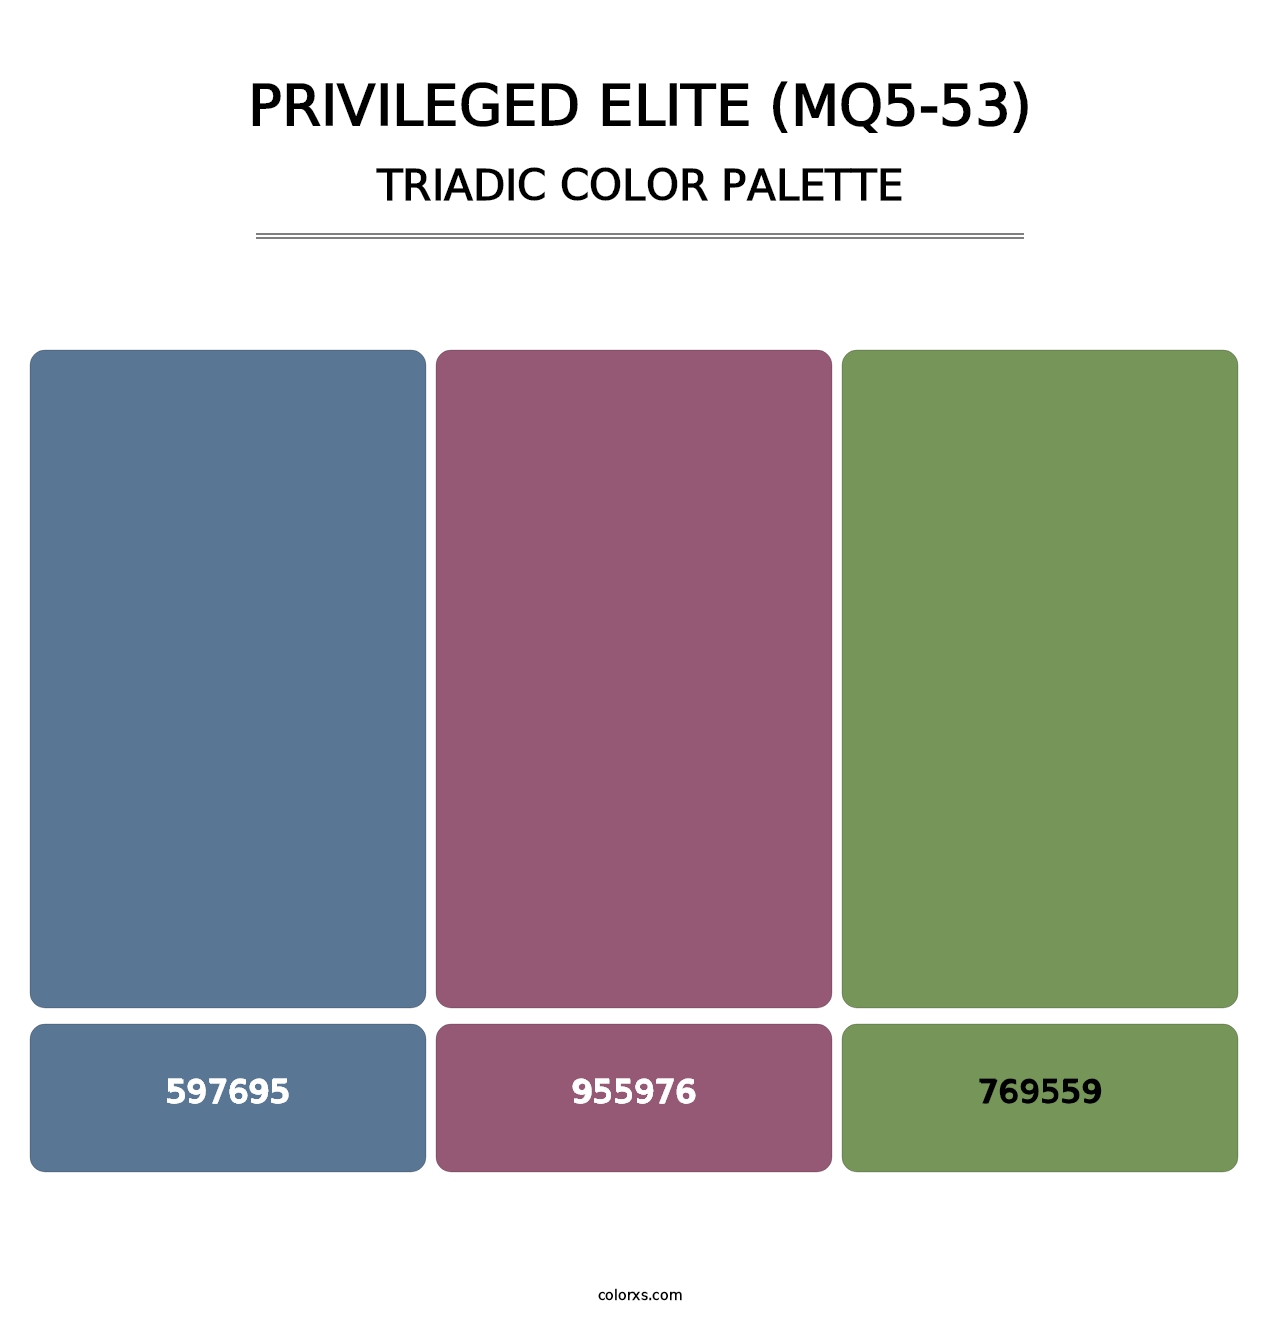 Privileged Elite (MQ5-53) - Triadic Color Palette